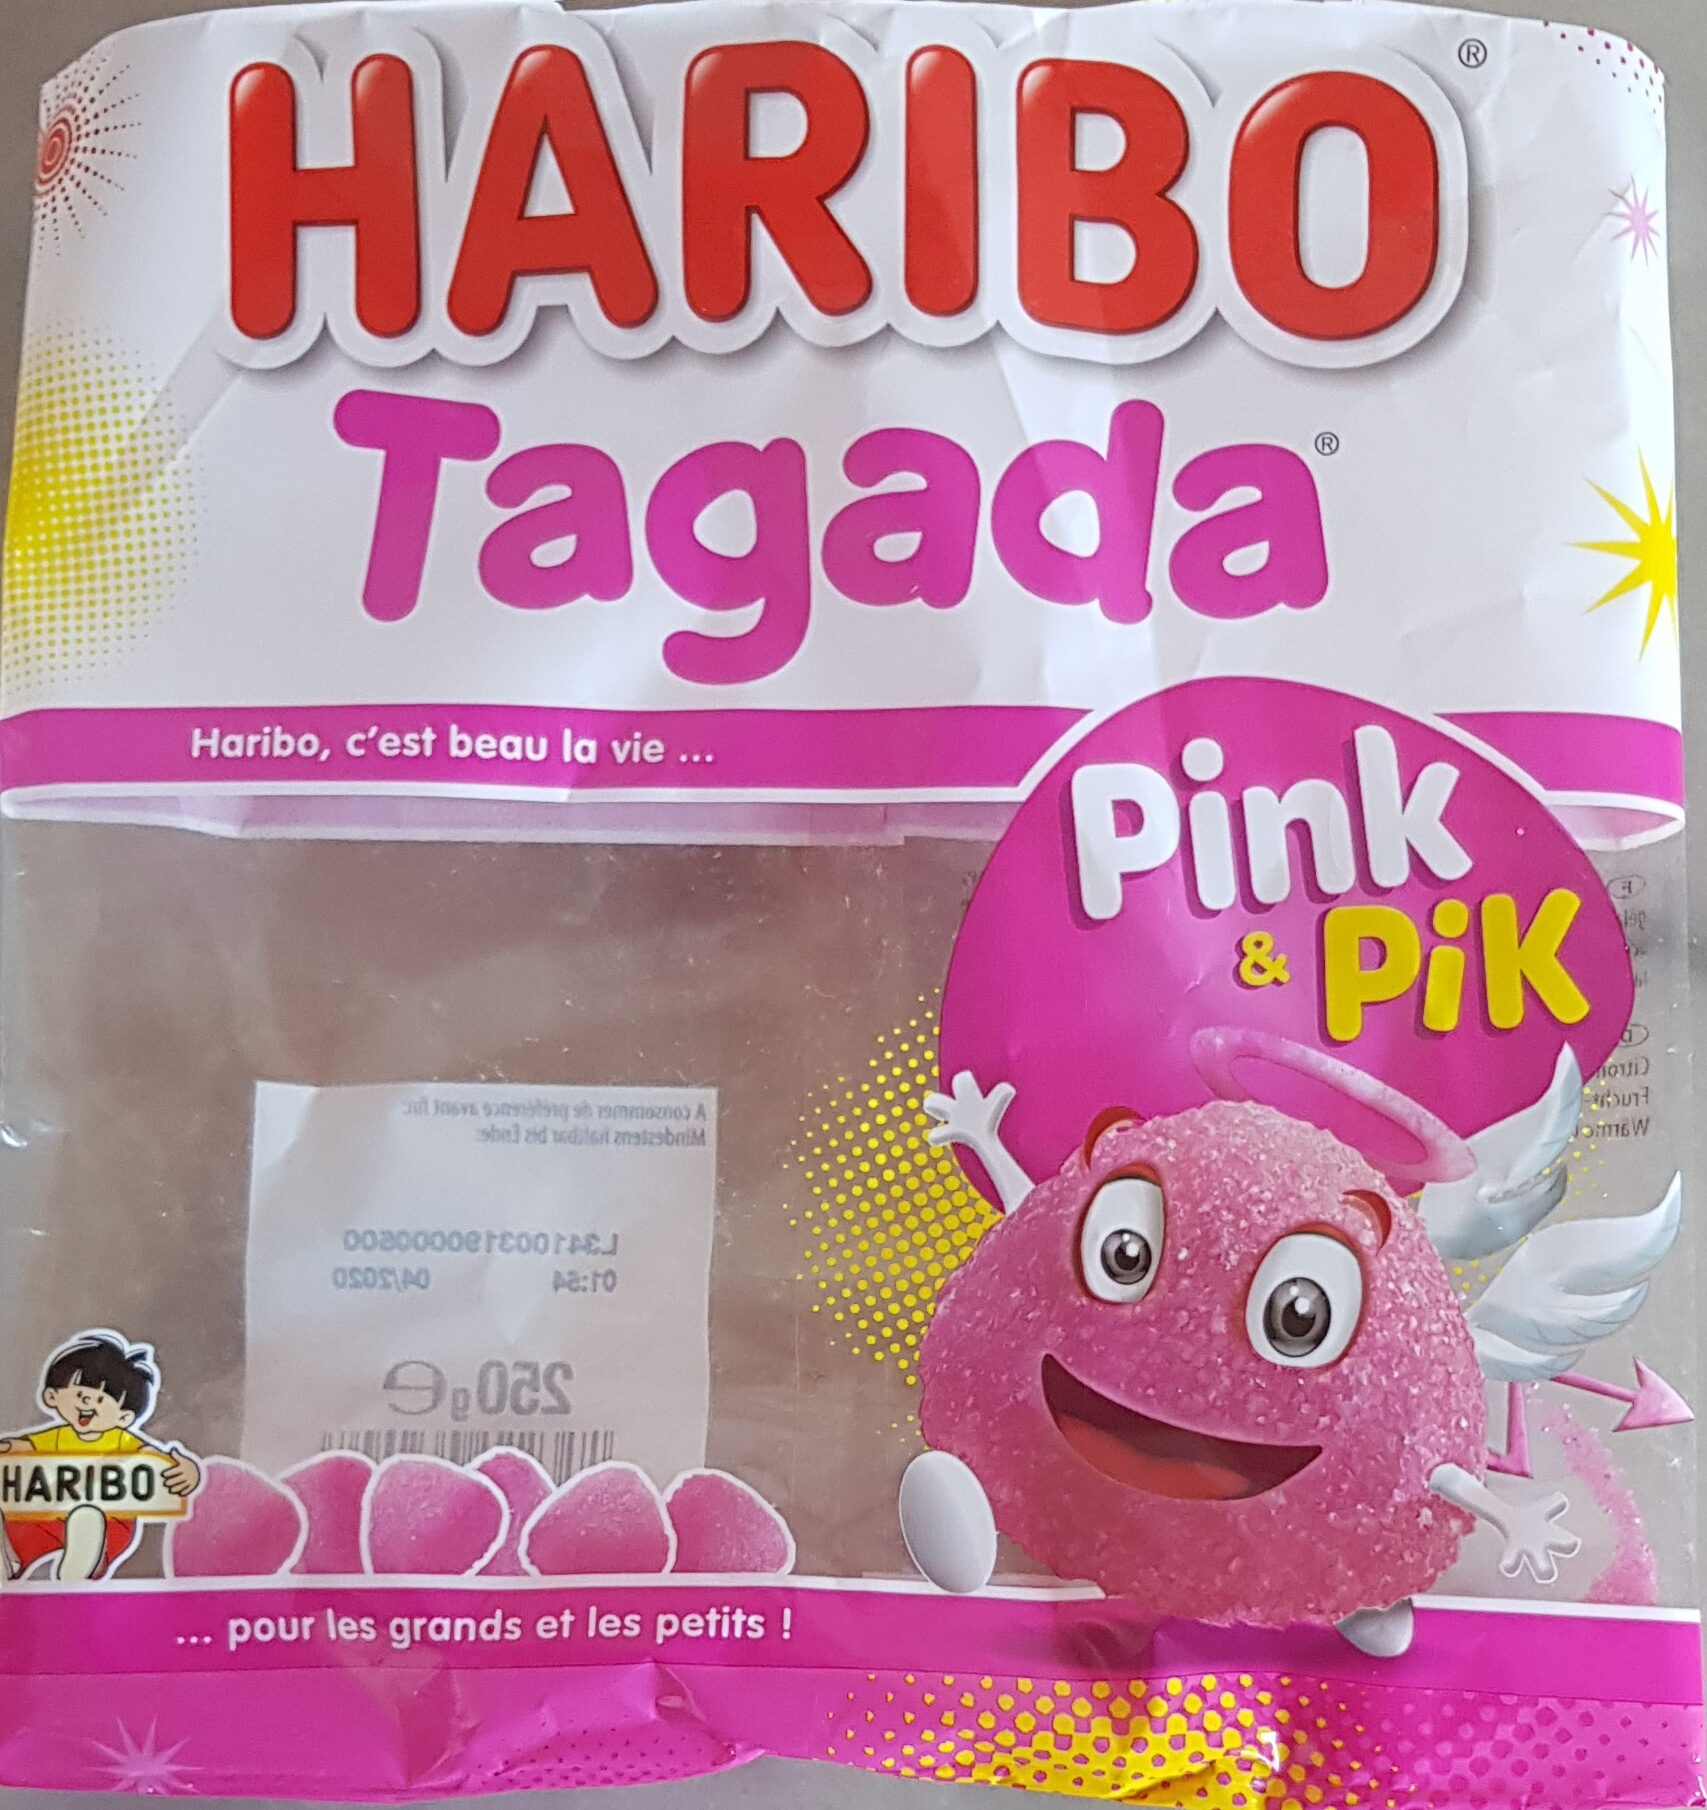 Tagada Pink & P!K - Produkt - fr